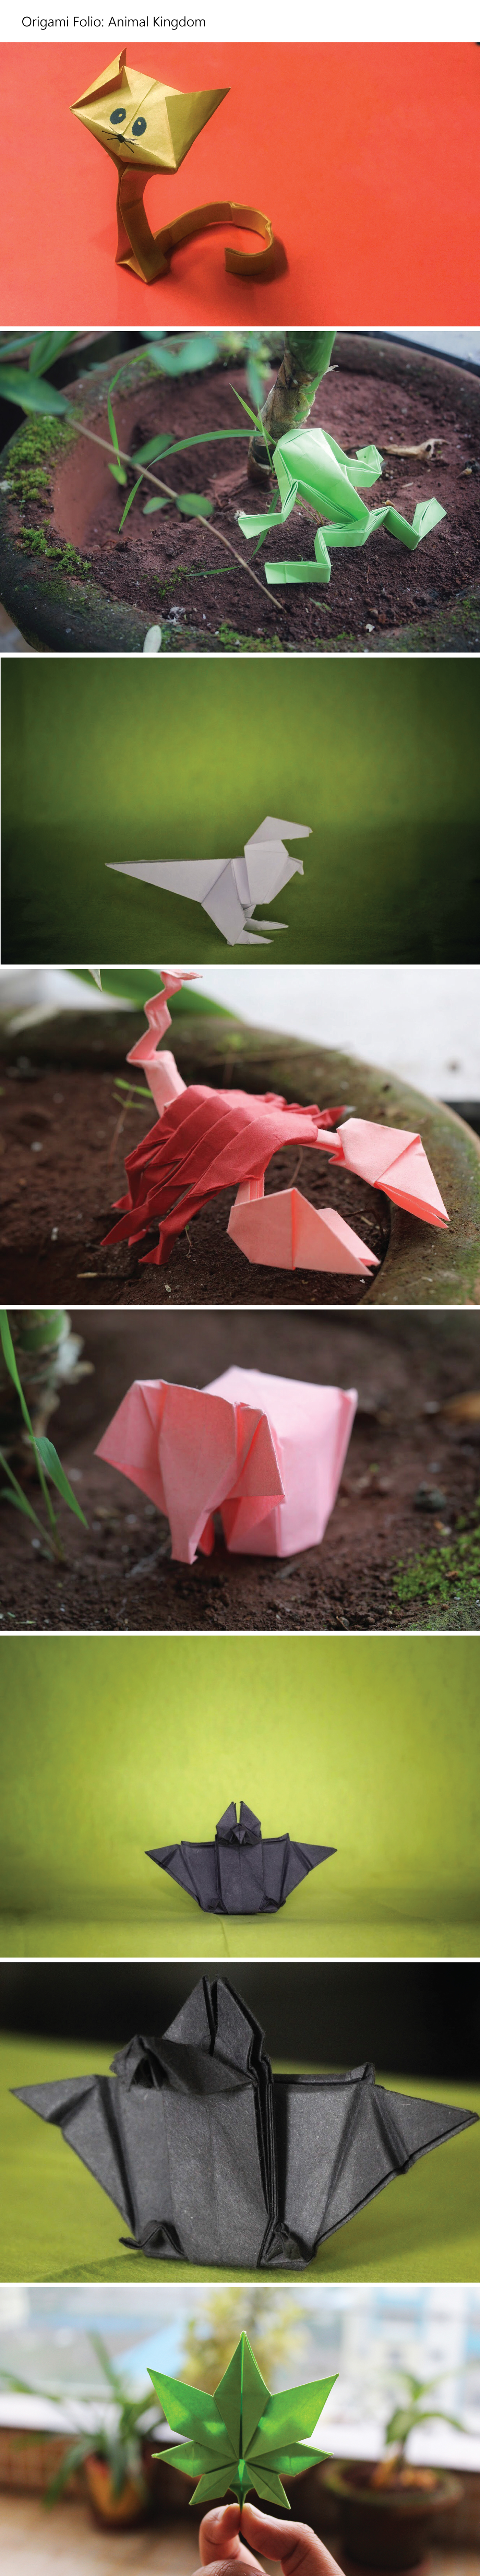 origami  Origami Animals paper folds foldings Origami photography origami animal kingdom